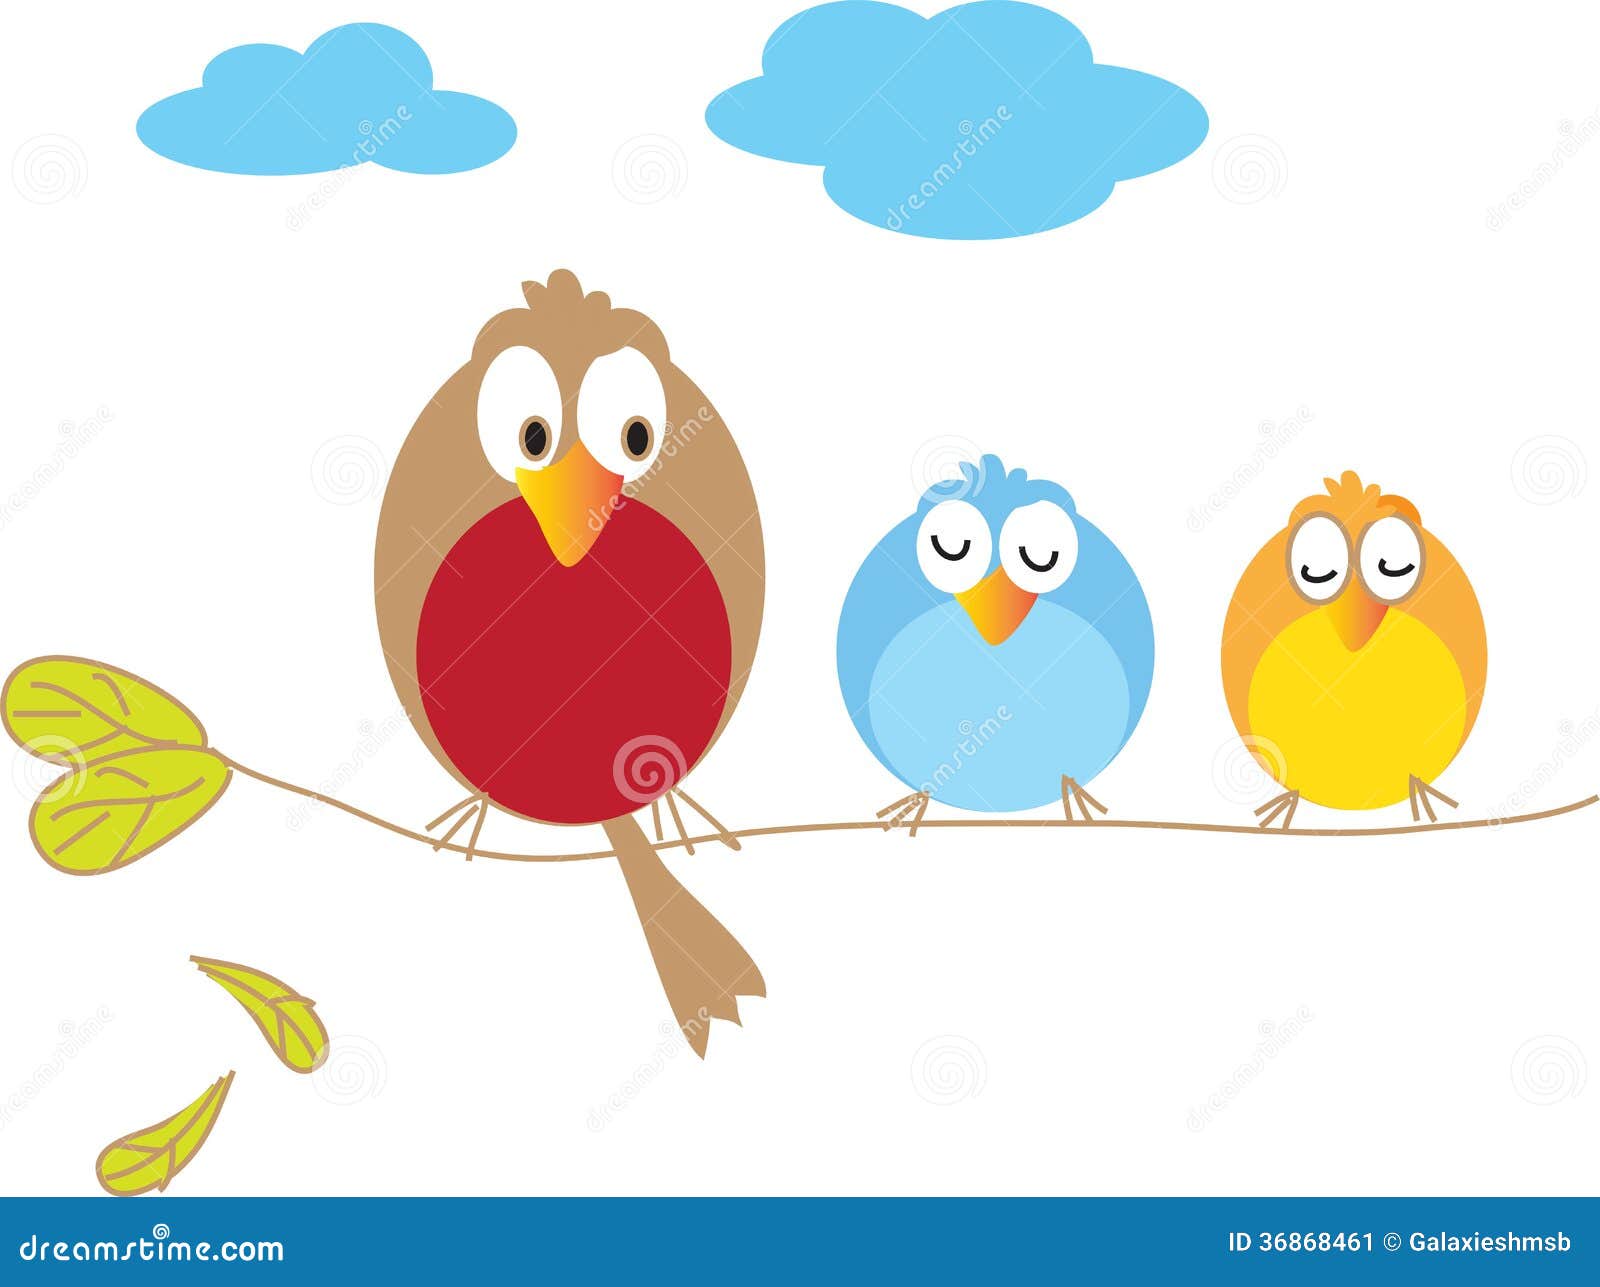 Three Birds Cartoon Vector 22252223